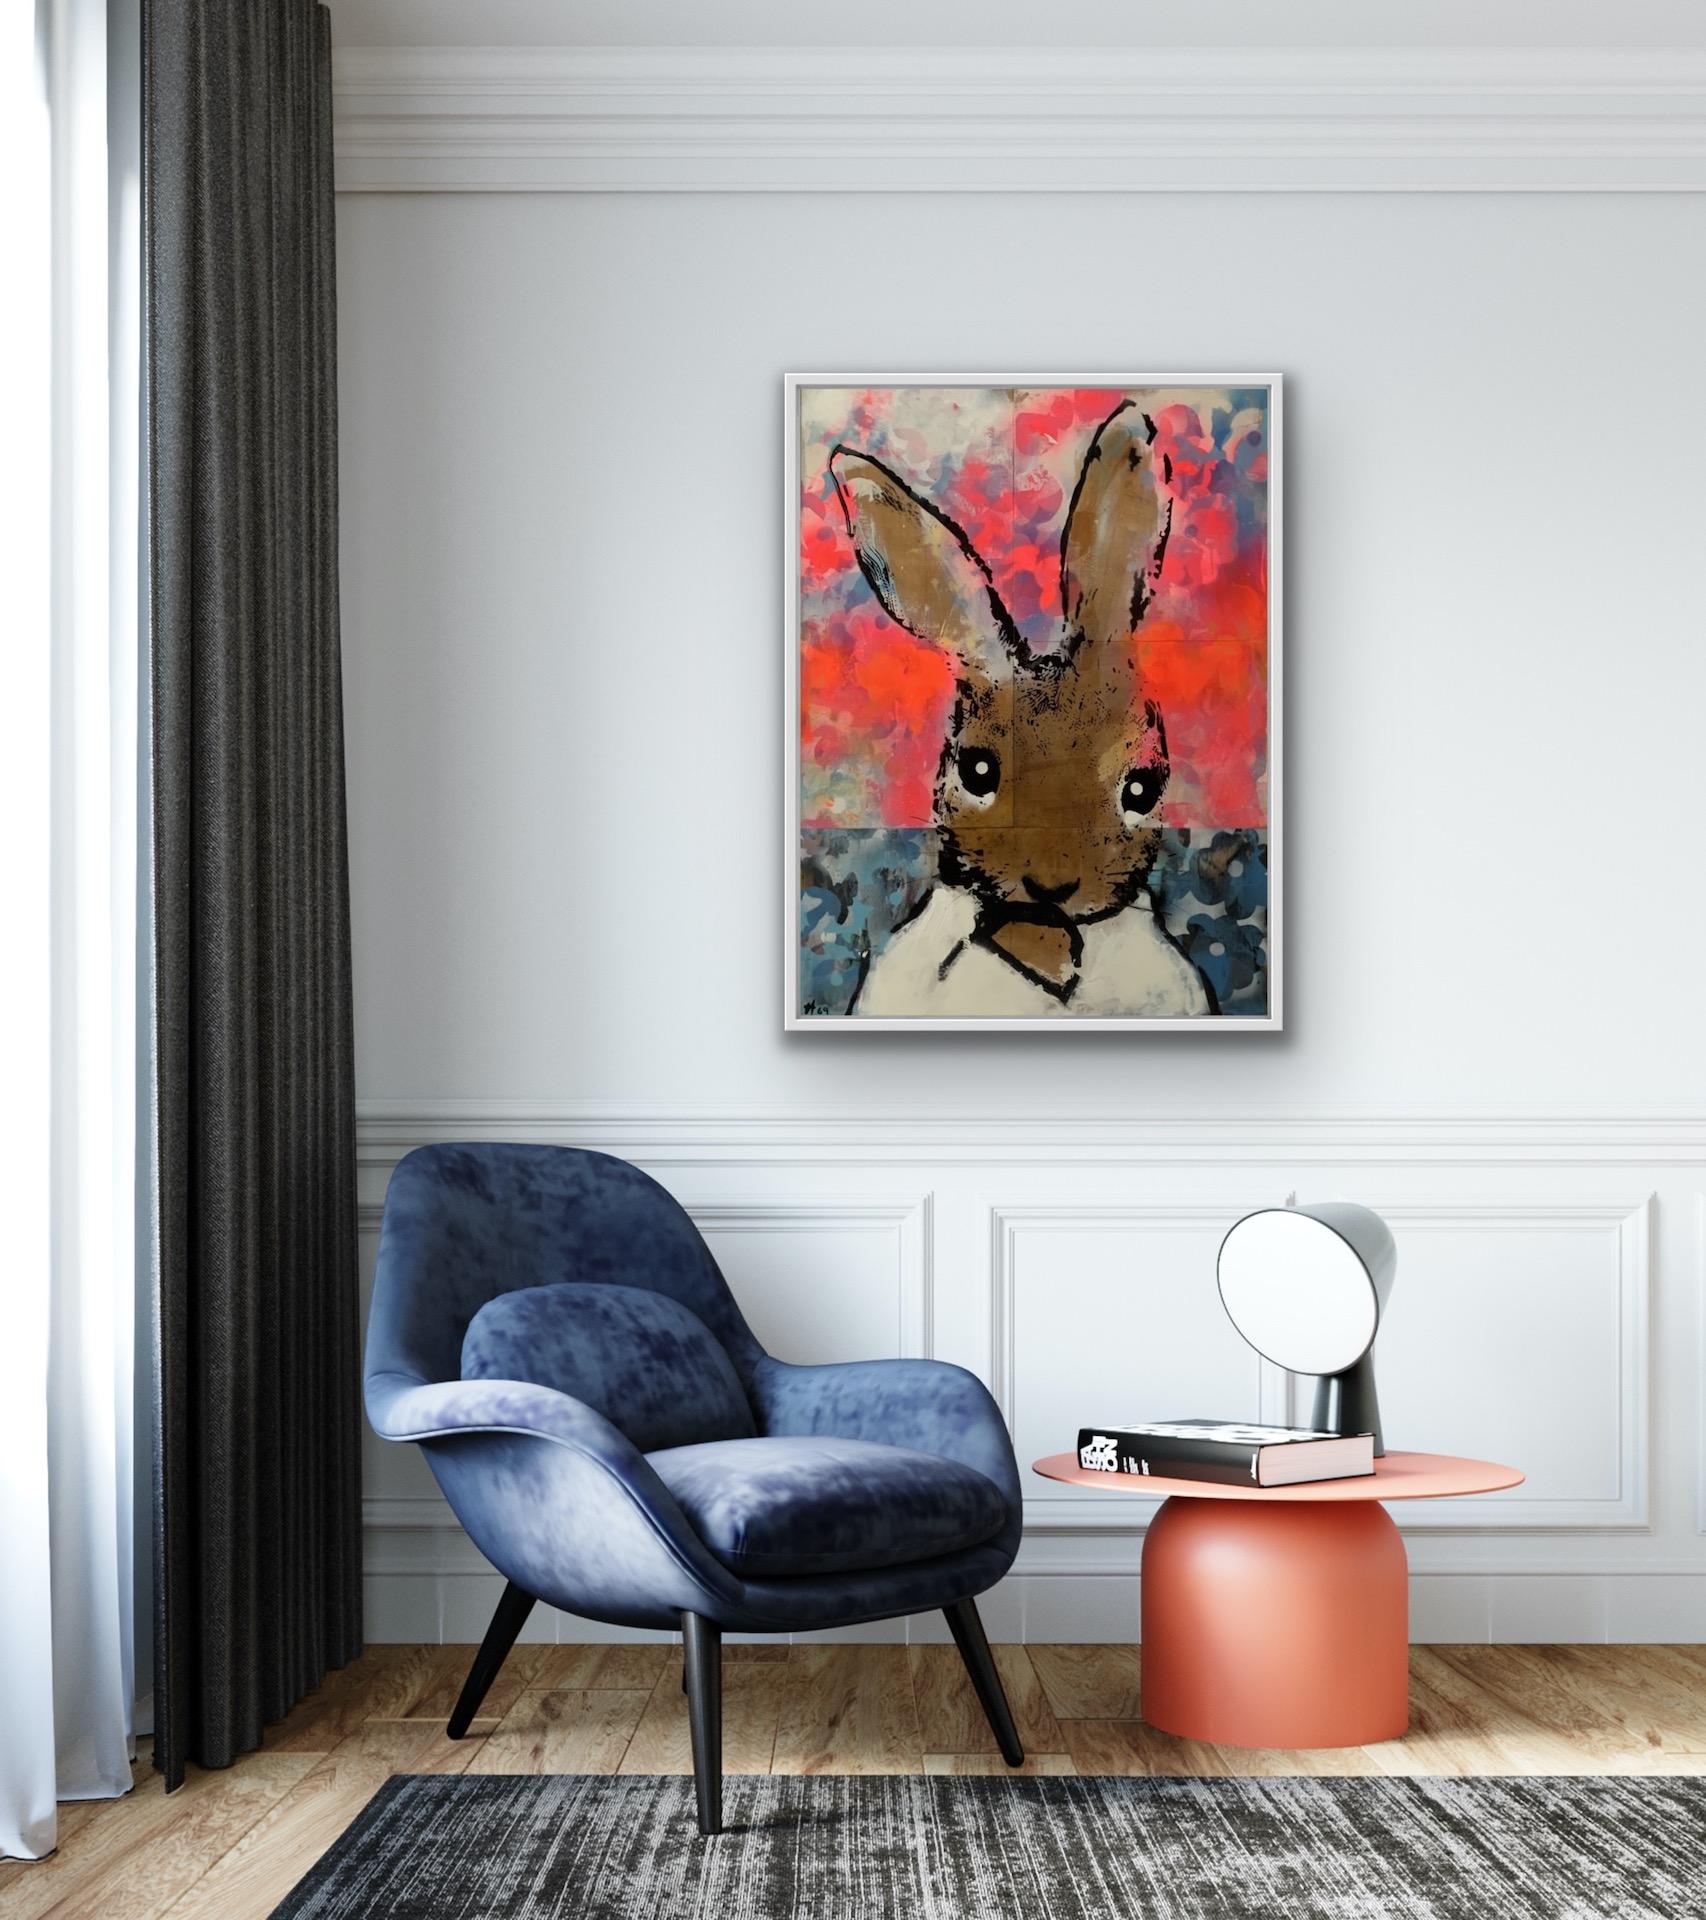 Harry Bunce, Sorry #69, Contemporary Art, Affordable Art, Animal Art 1